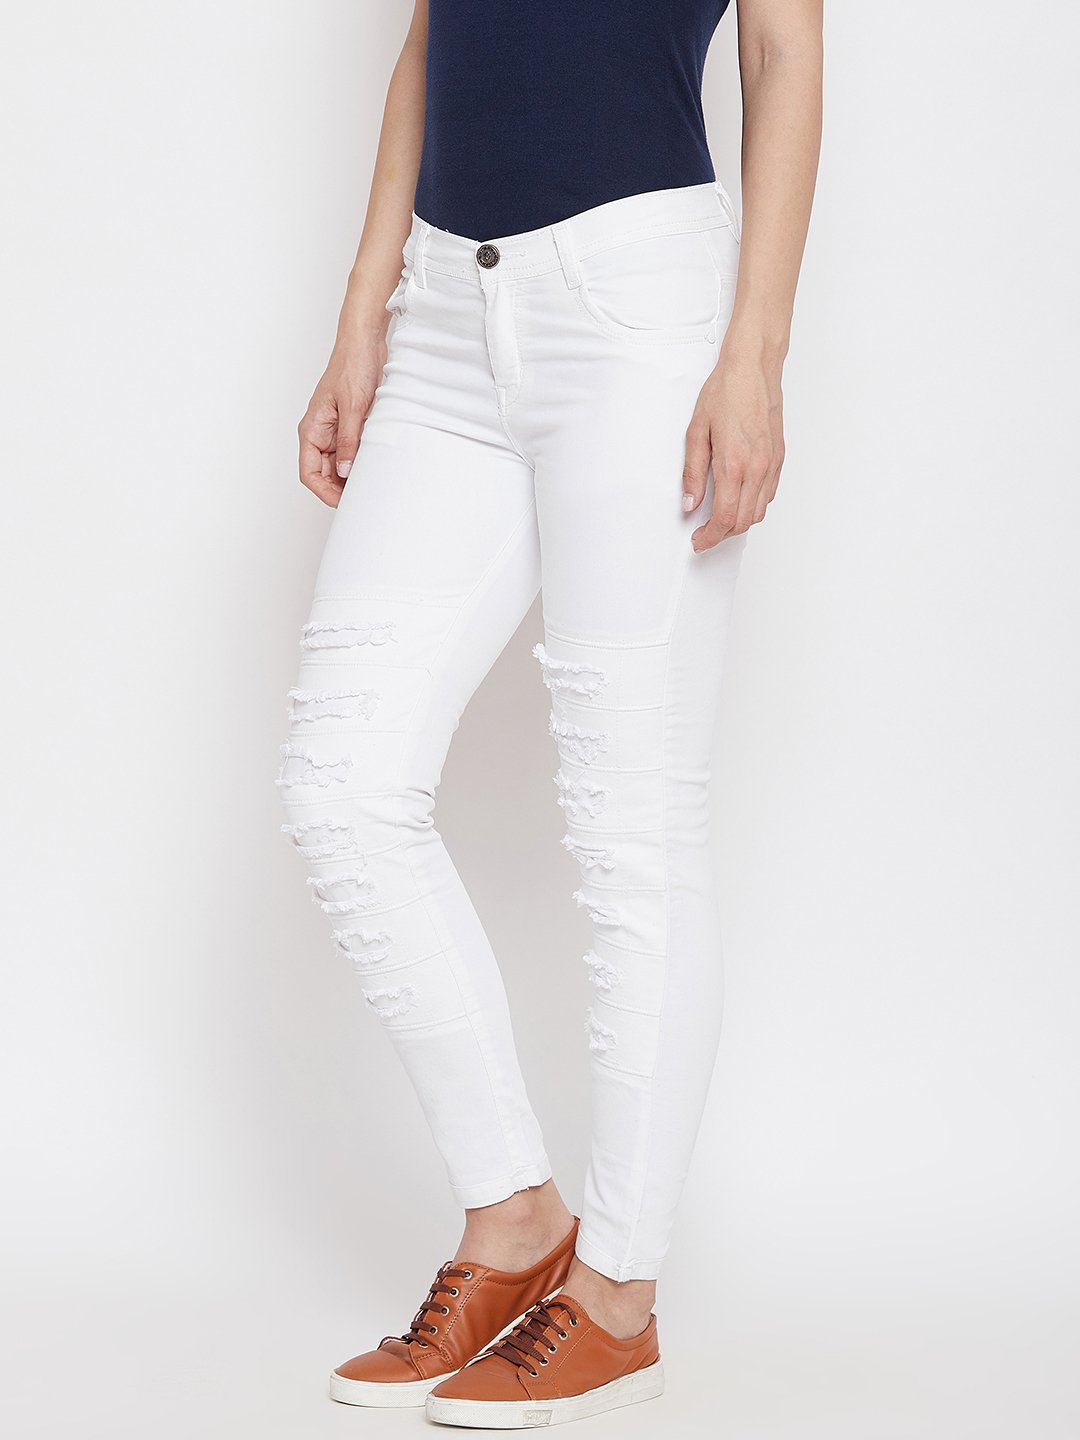 Buy White Jeans for Men by Hardsoda Online  Ajiocom